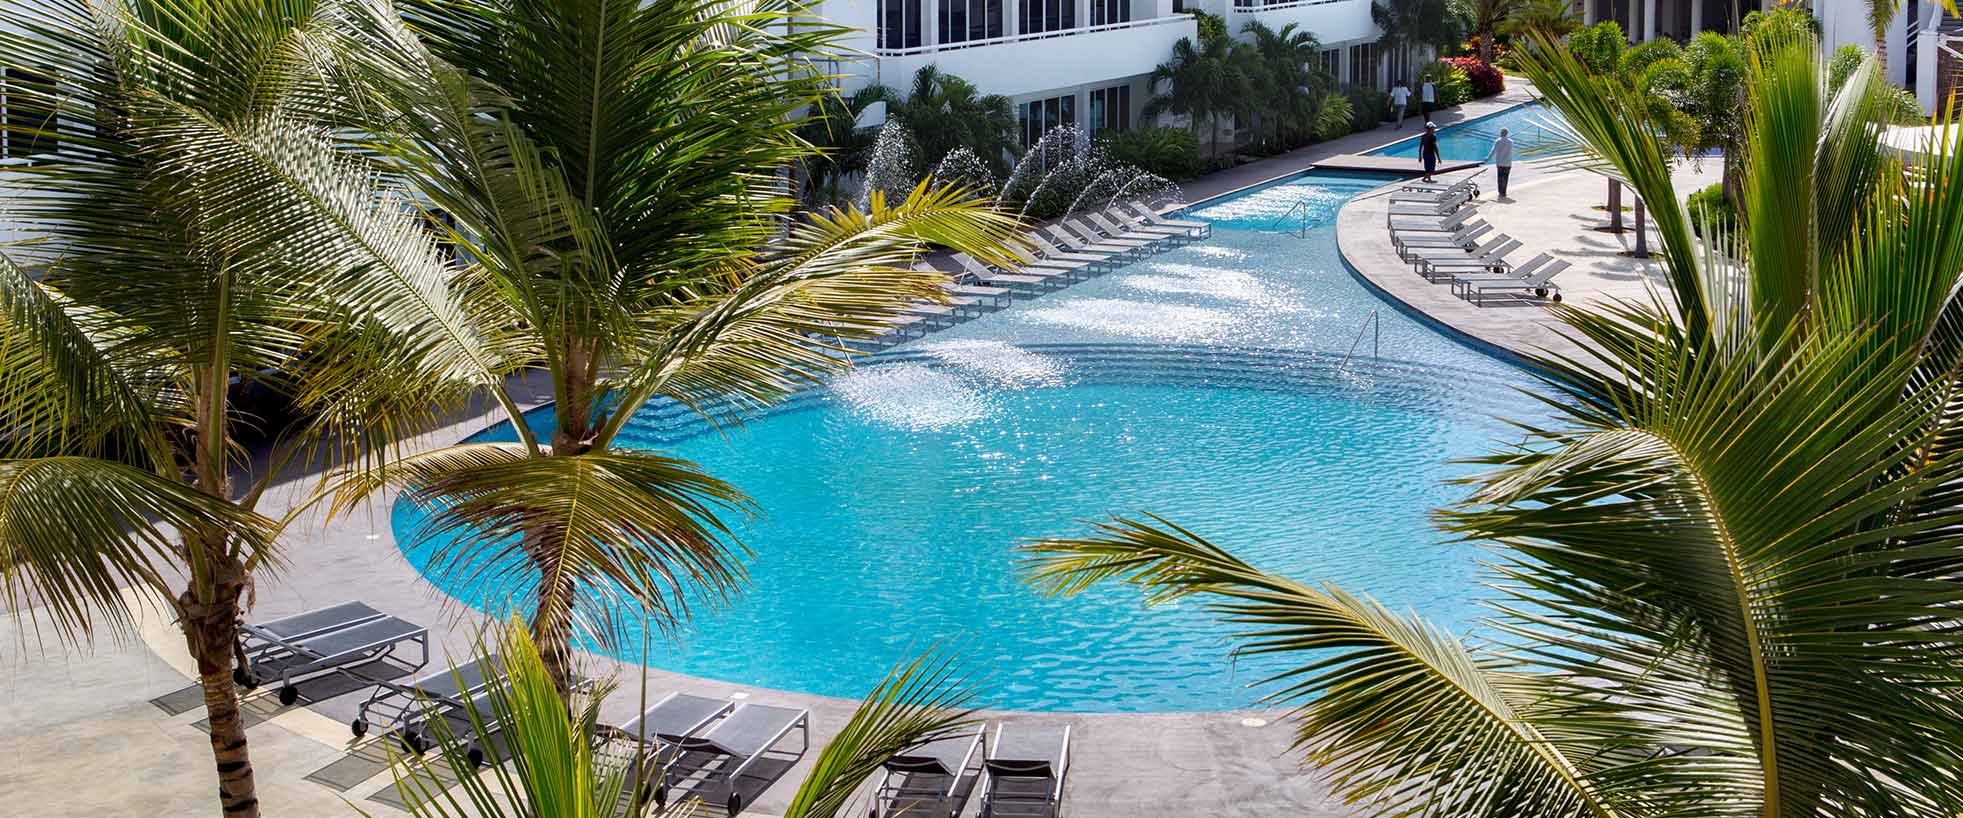 On Vacation - Isla Margarita - Hotel LD Plus Palm Beach